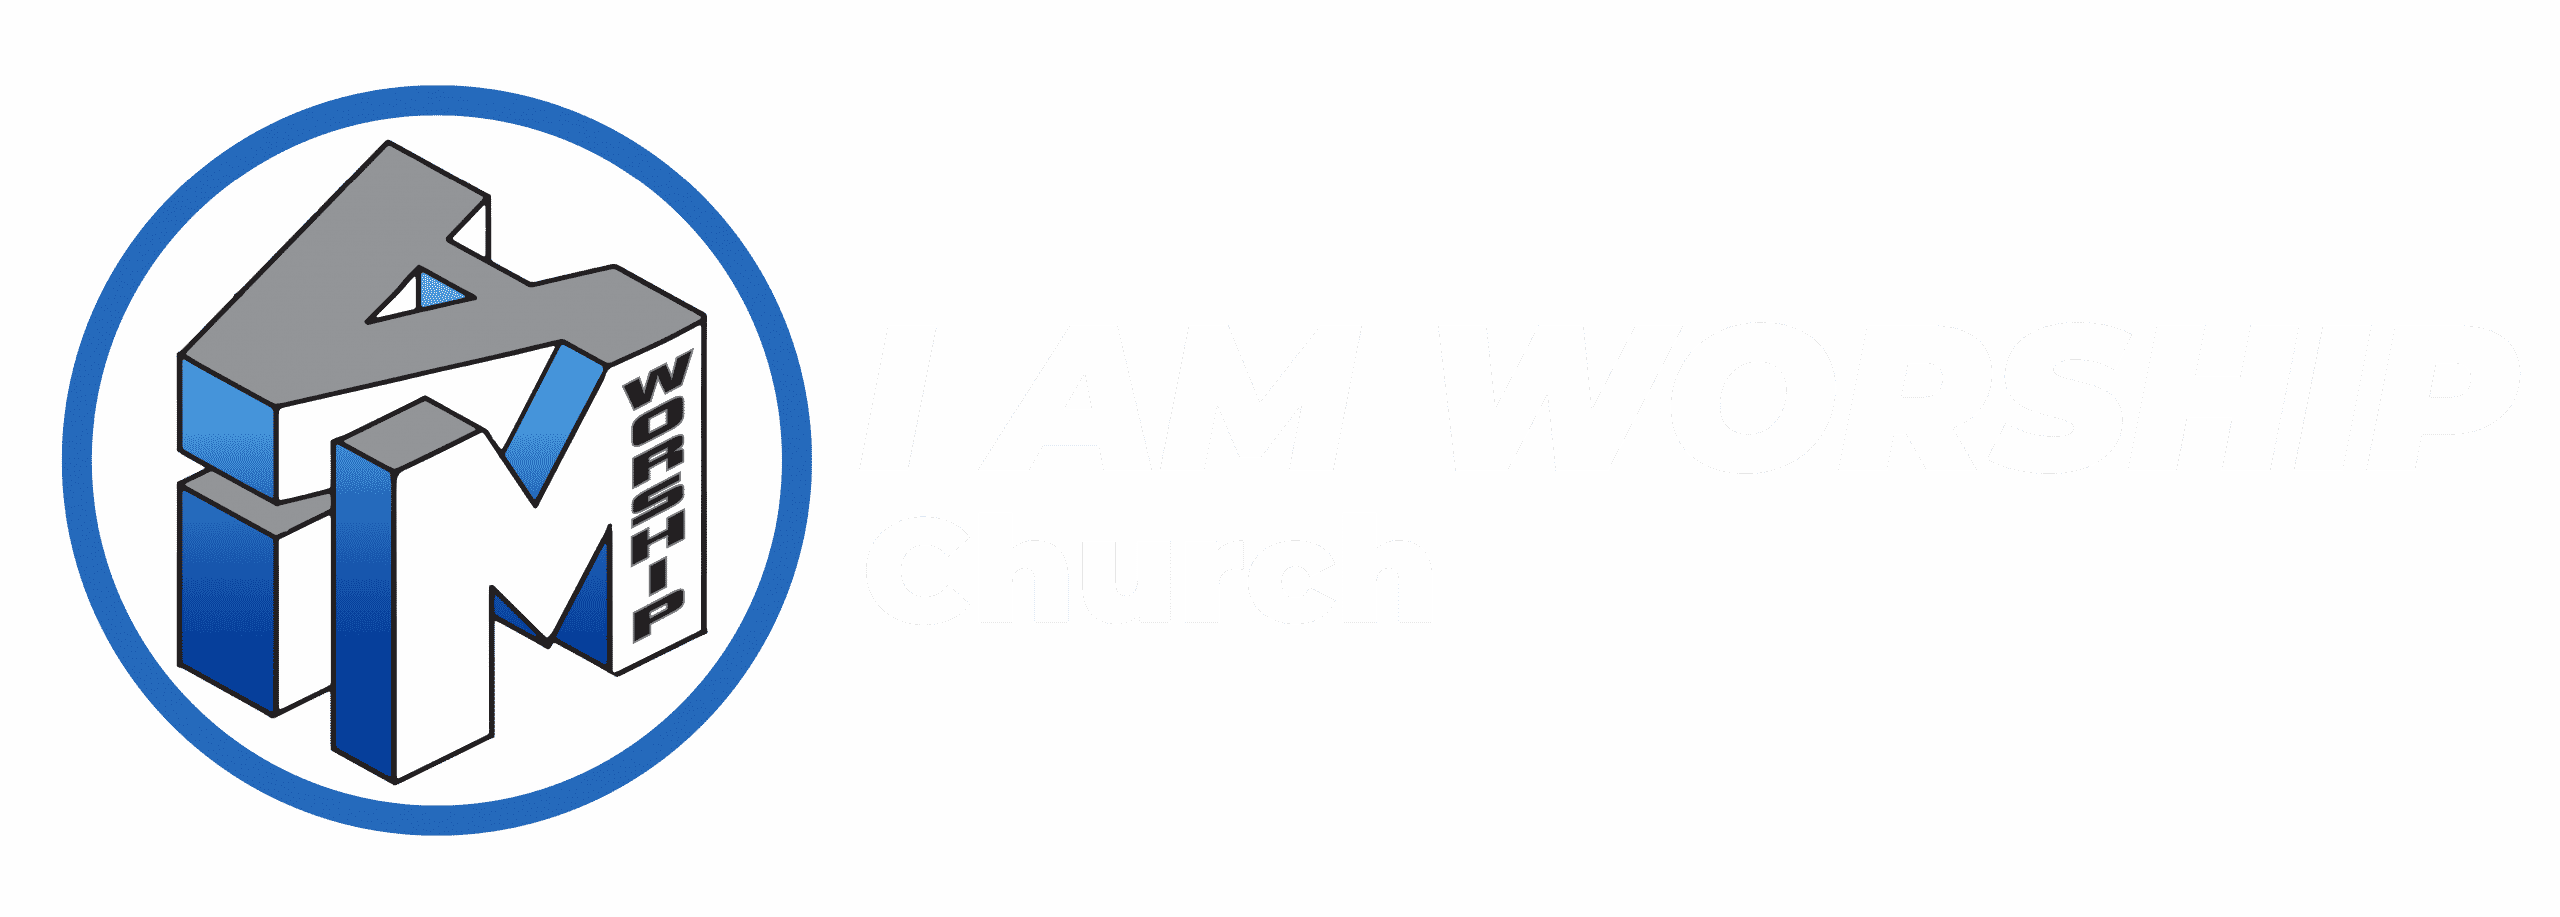 I AM Worship Church